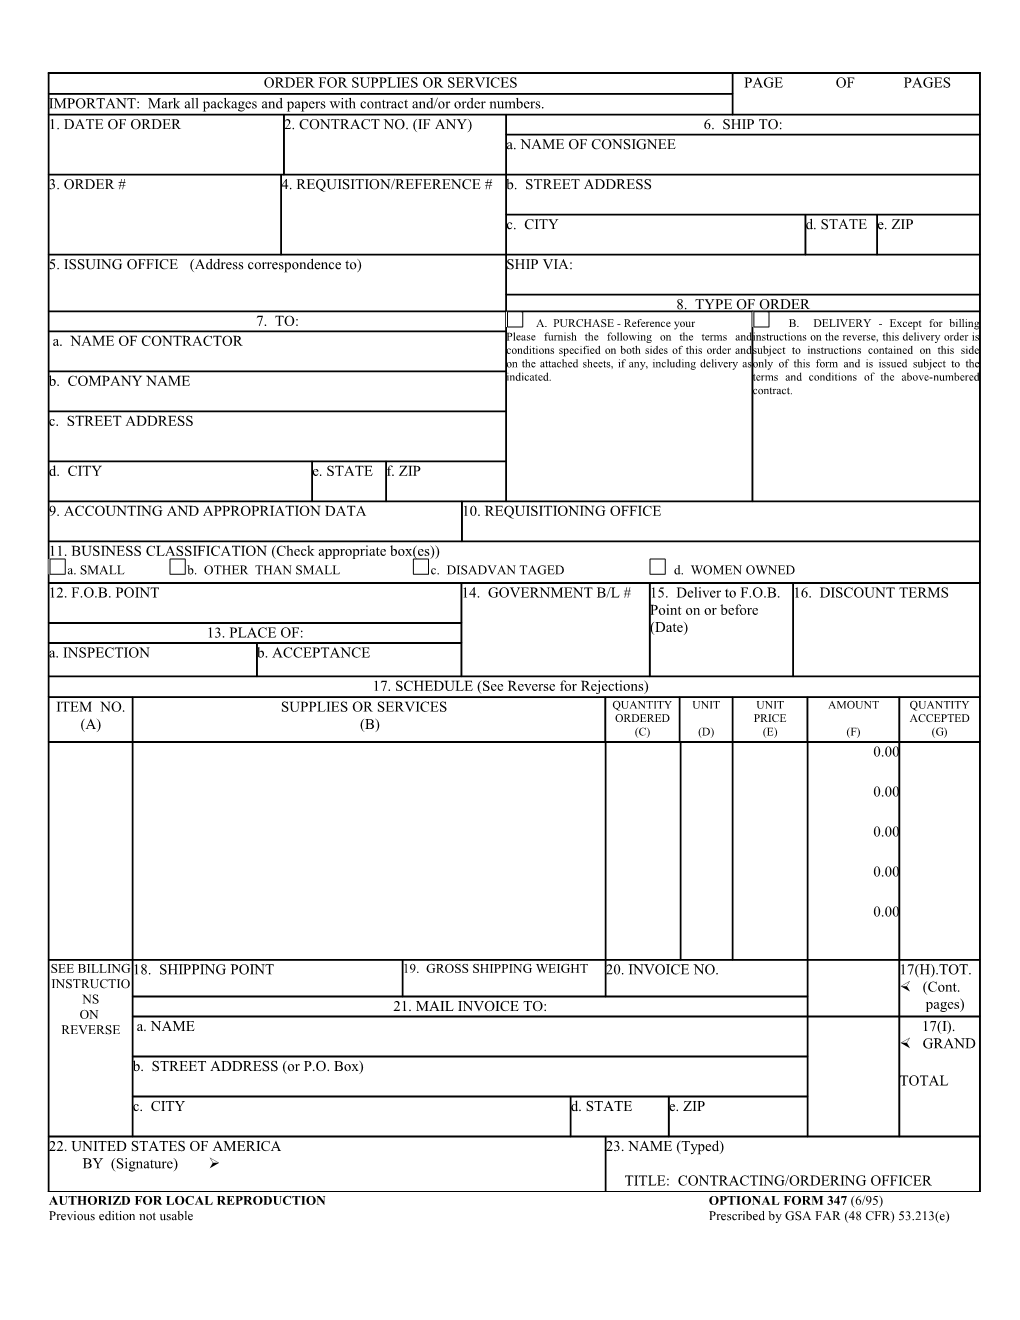 Authorizd for Local Reproductionoptional Form 347 (6/95)